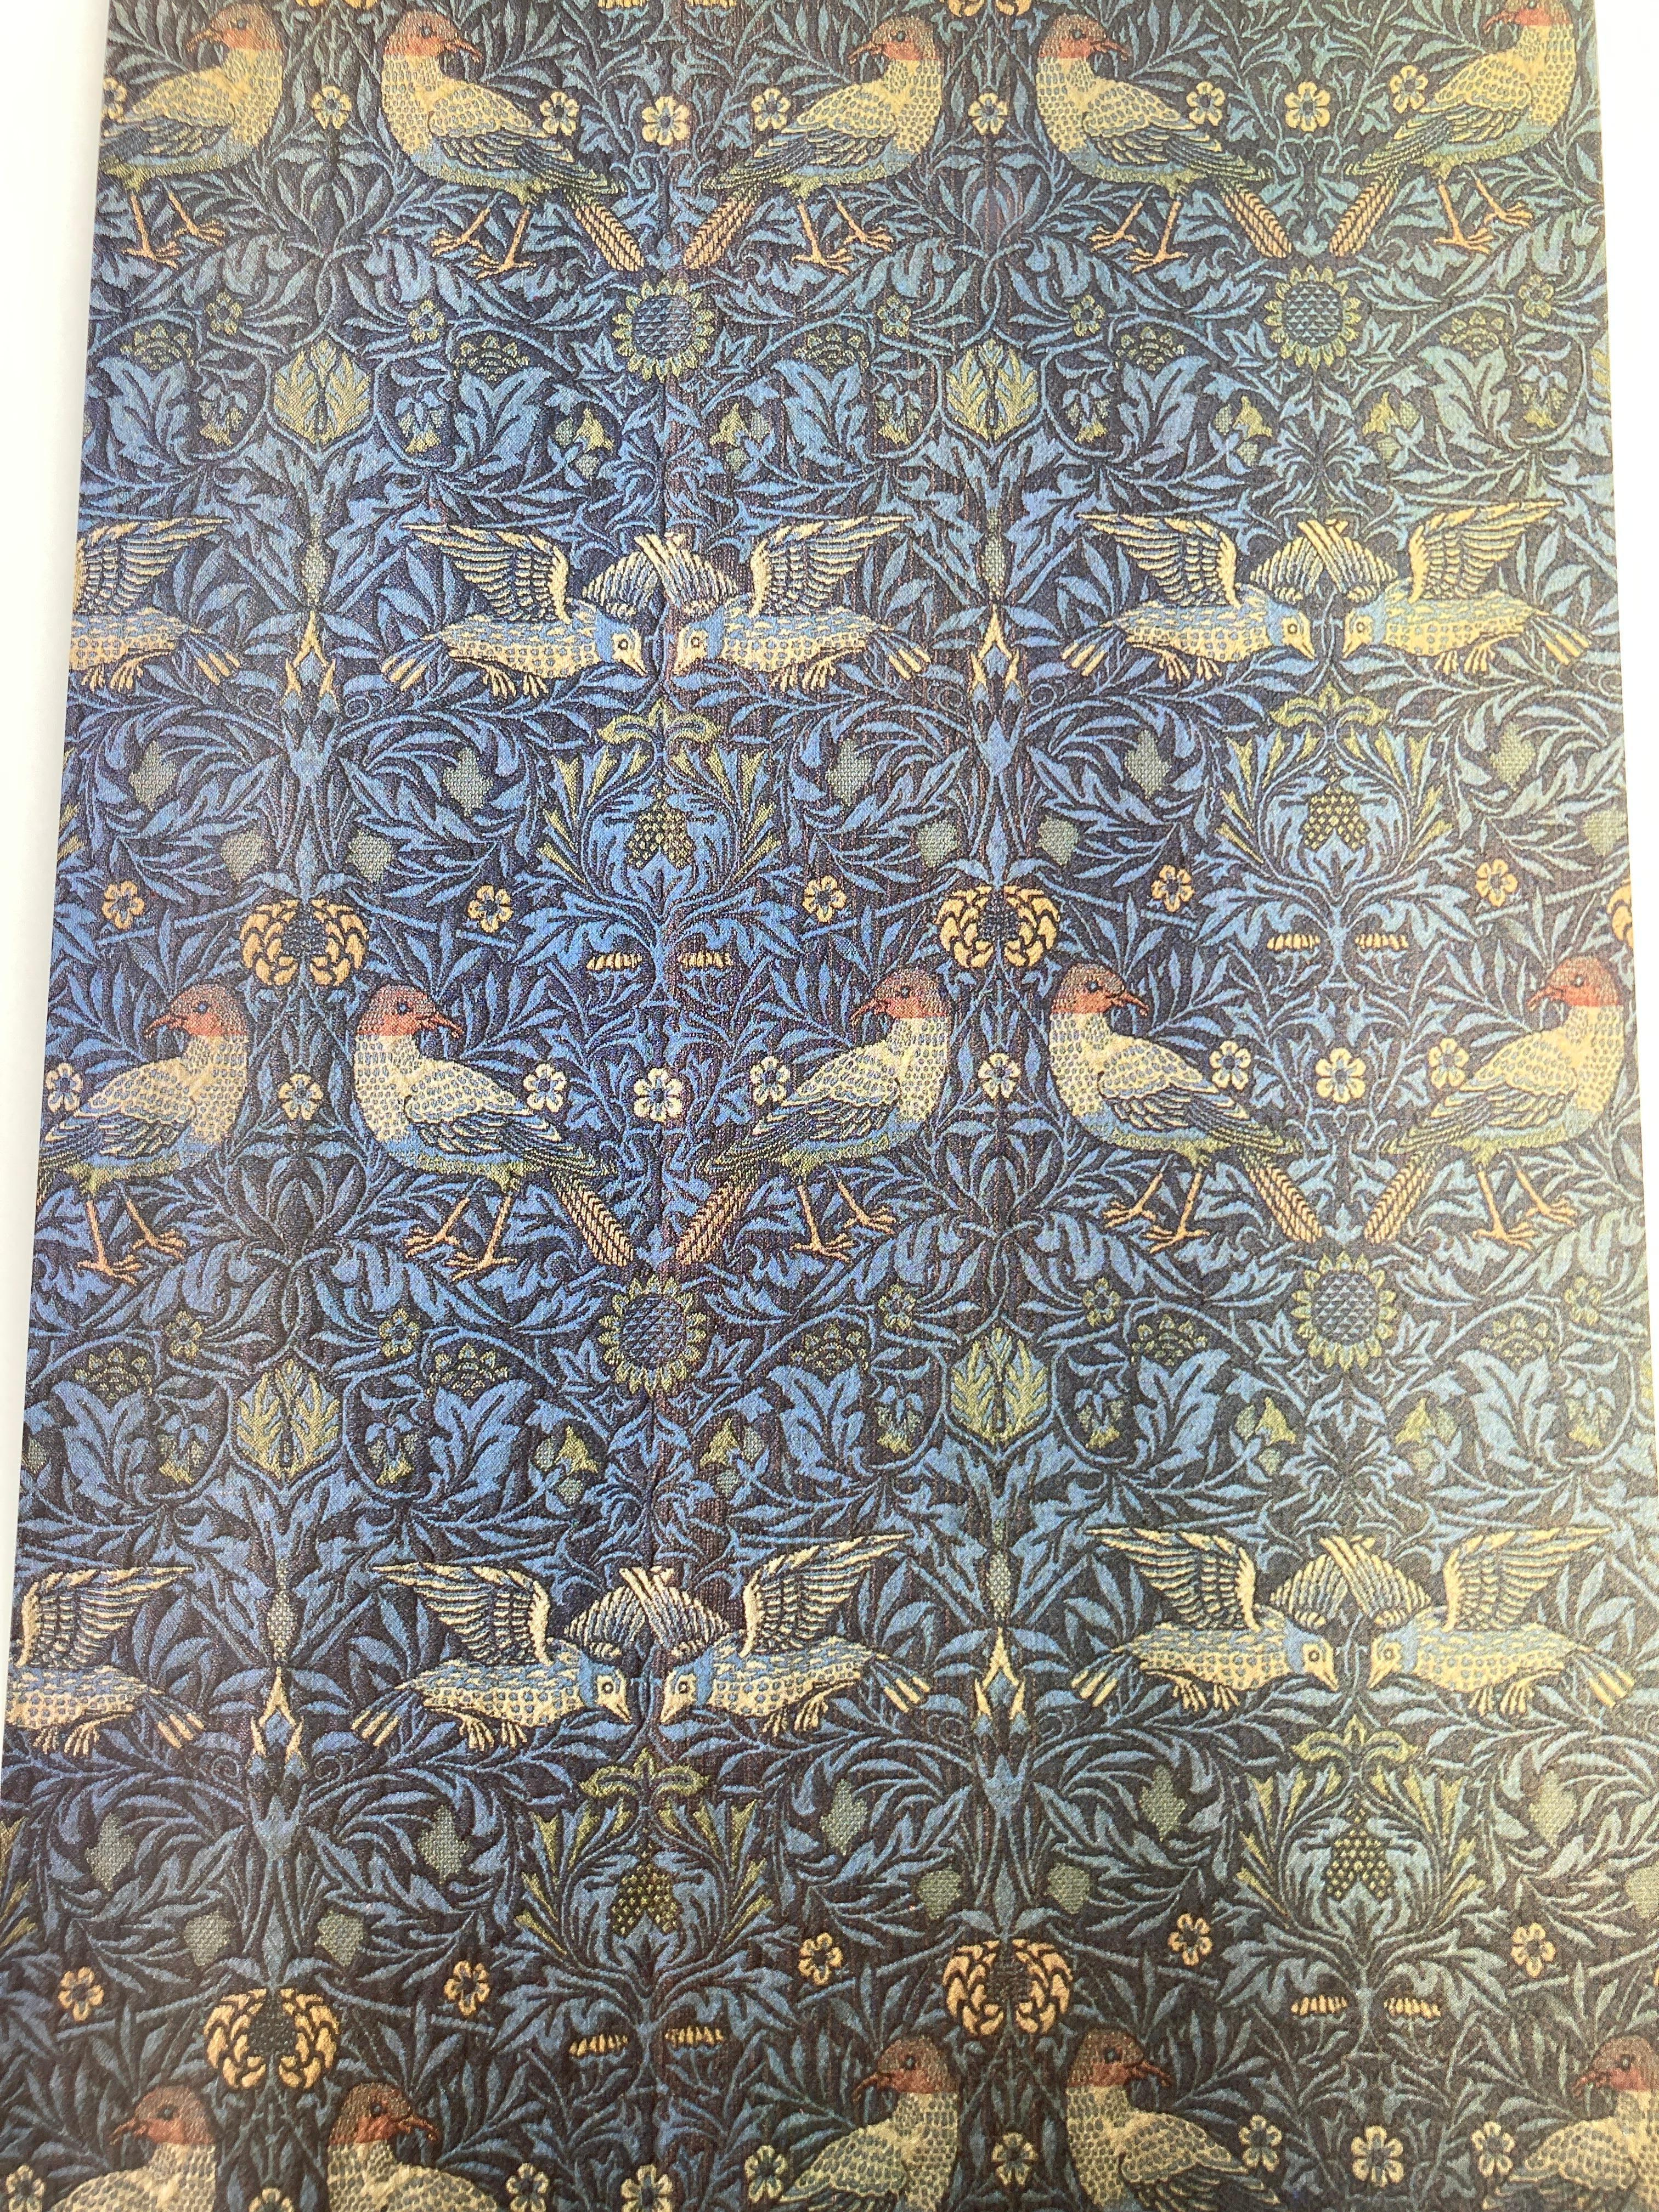 William Morris Full-Color Patterns and Designs Book by William Morris 4